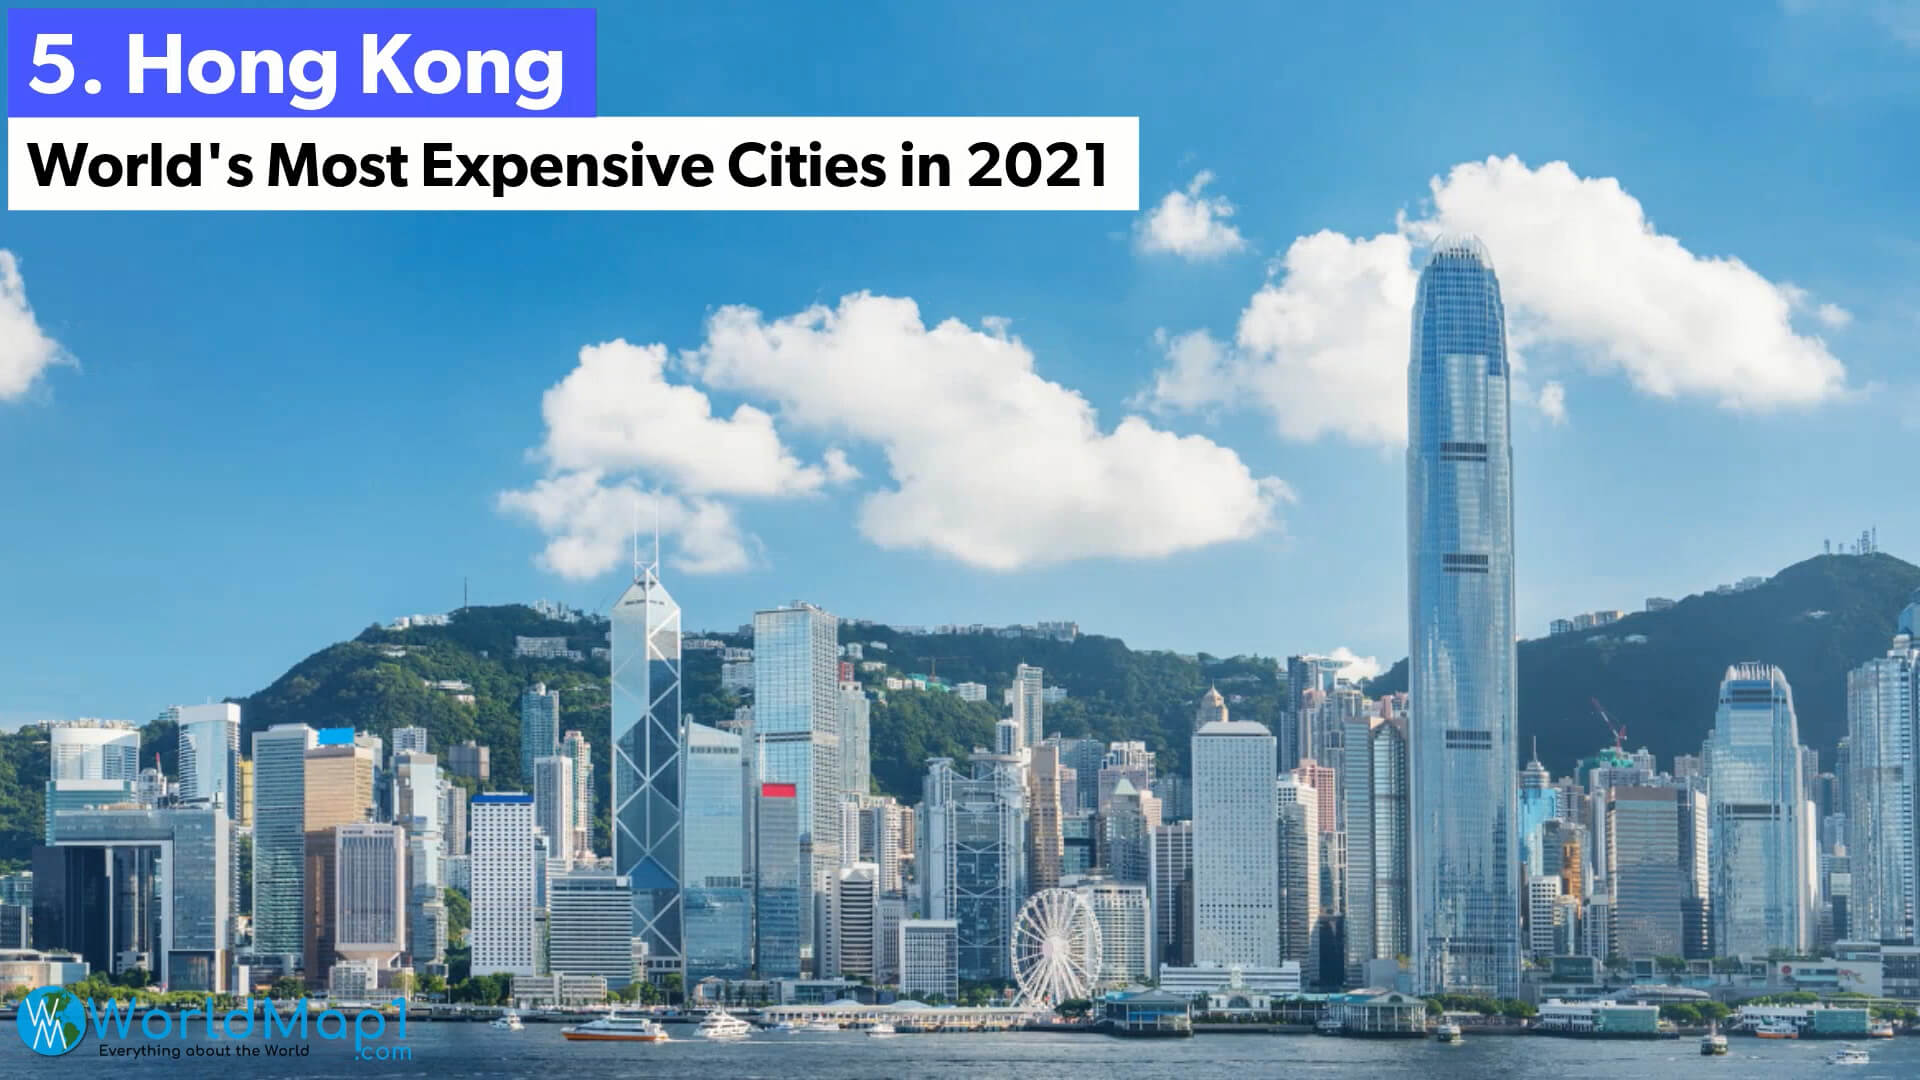 World's Most Expensive Cities - Hong Kong